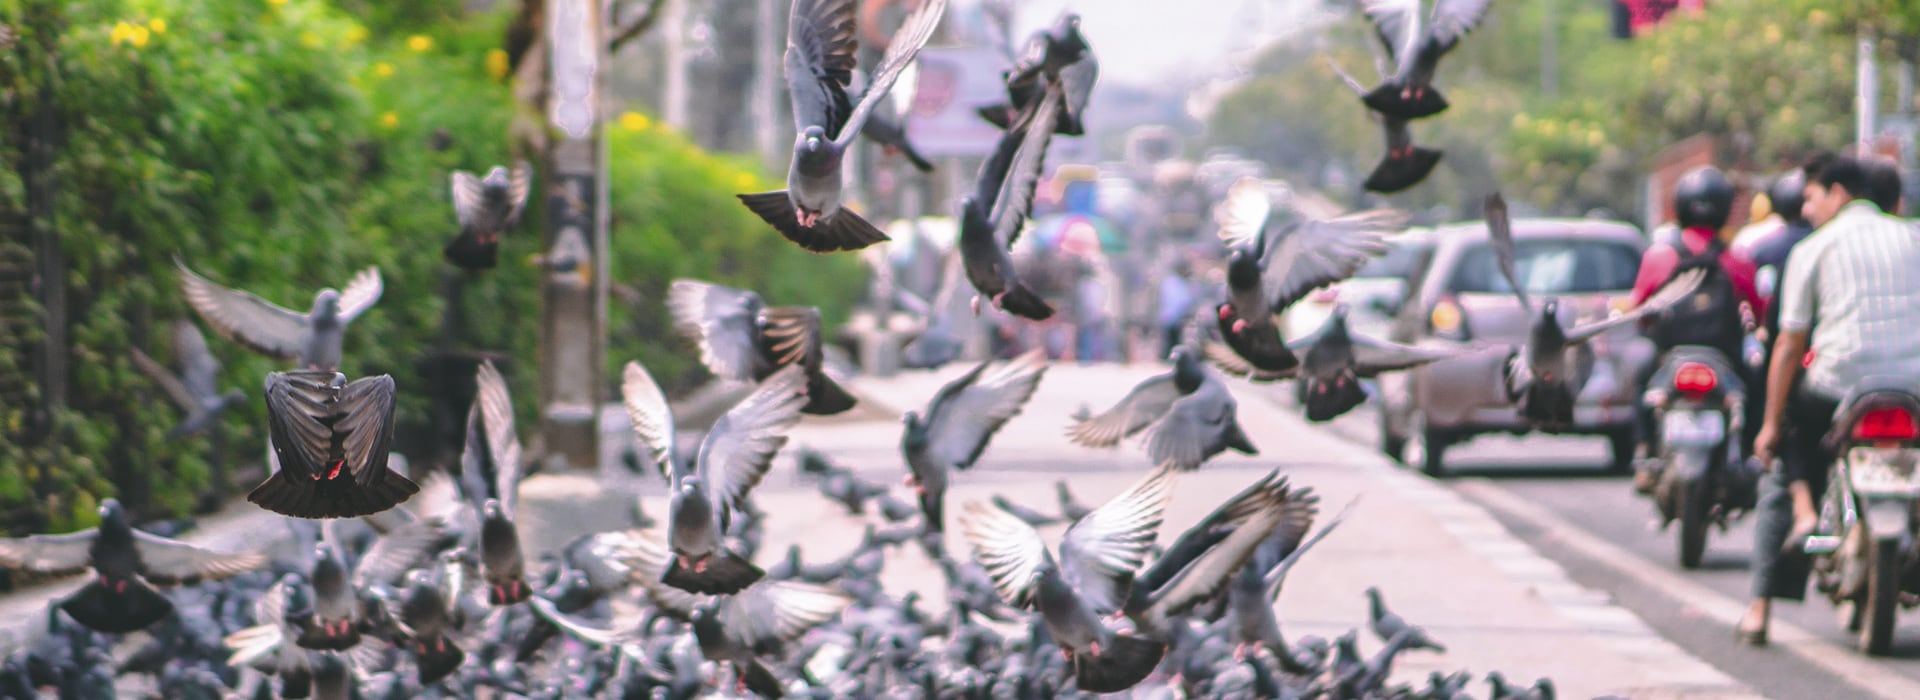 control de palomas | Control de Plagas